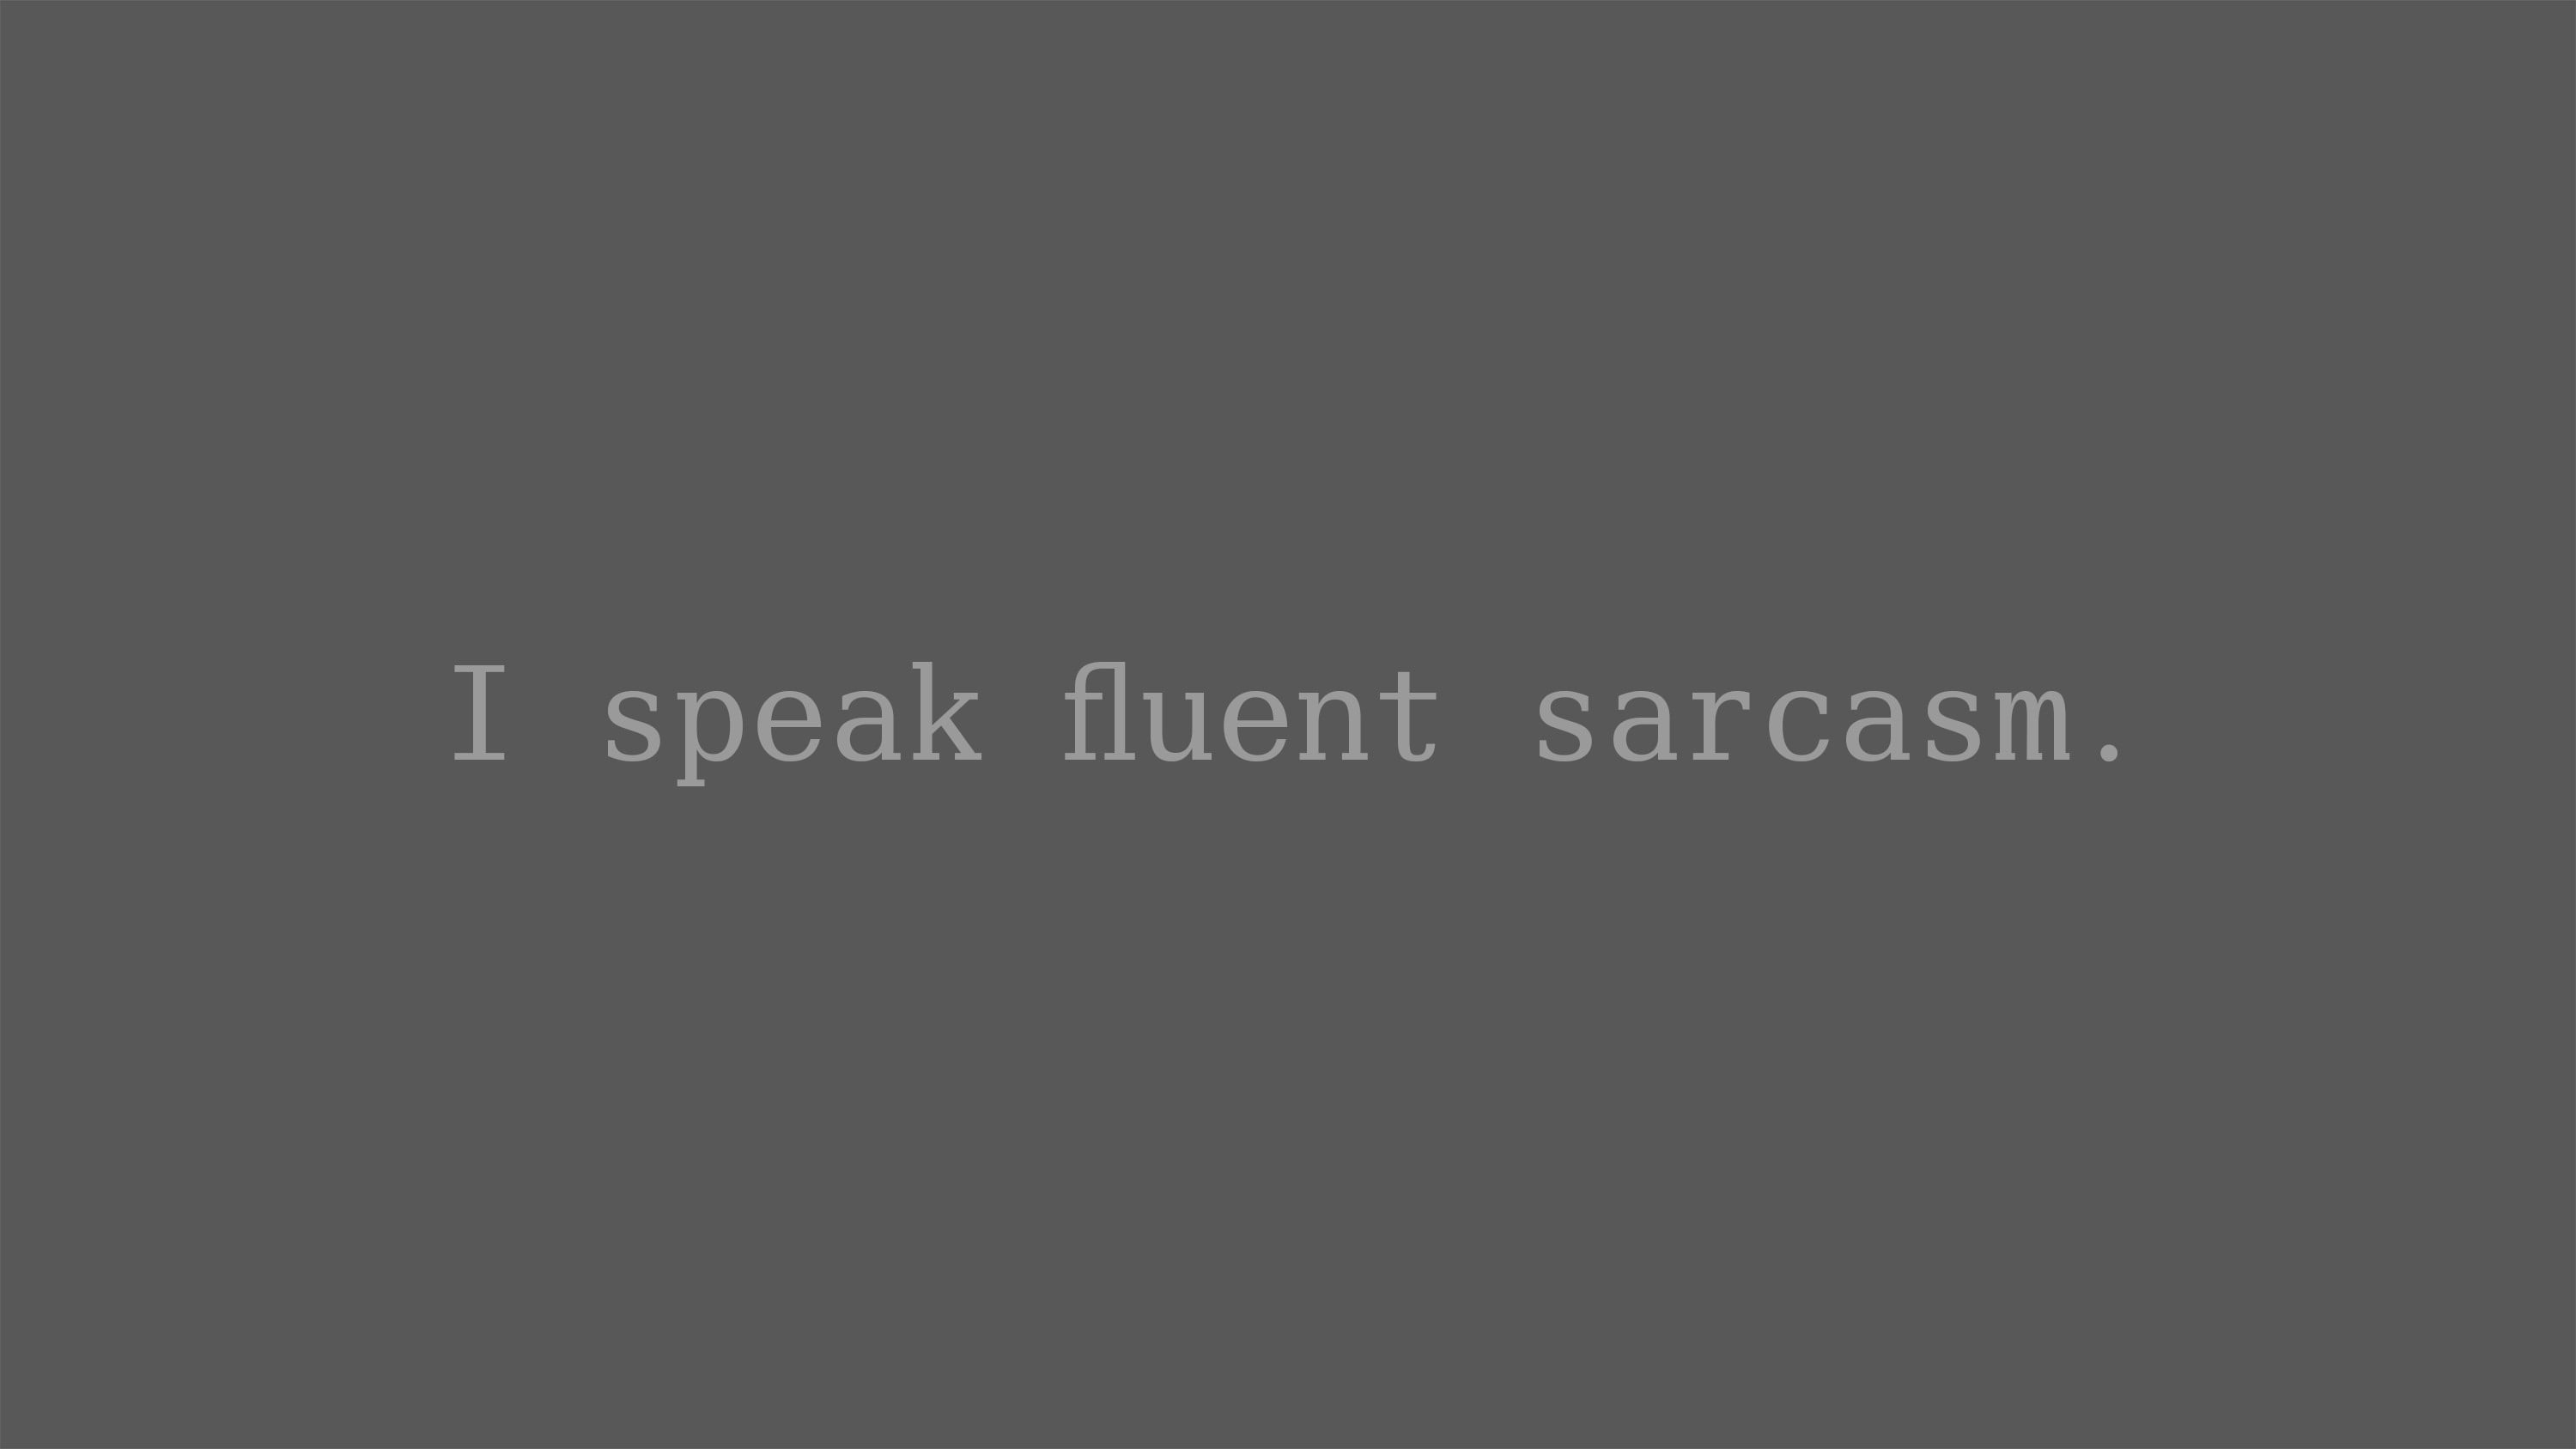 i speak fluent sarcasm text overlay, sarcasm, quote, truth